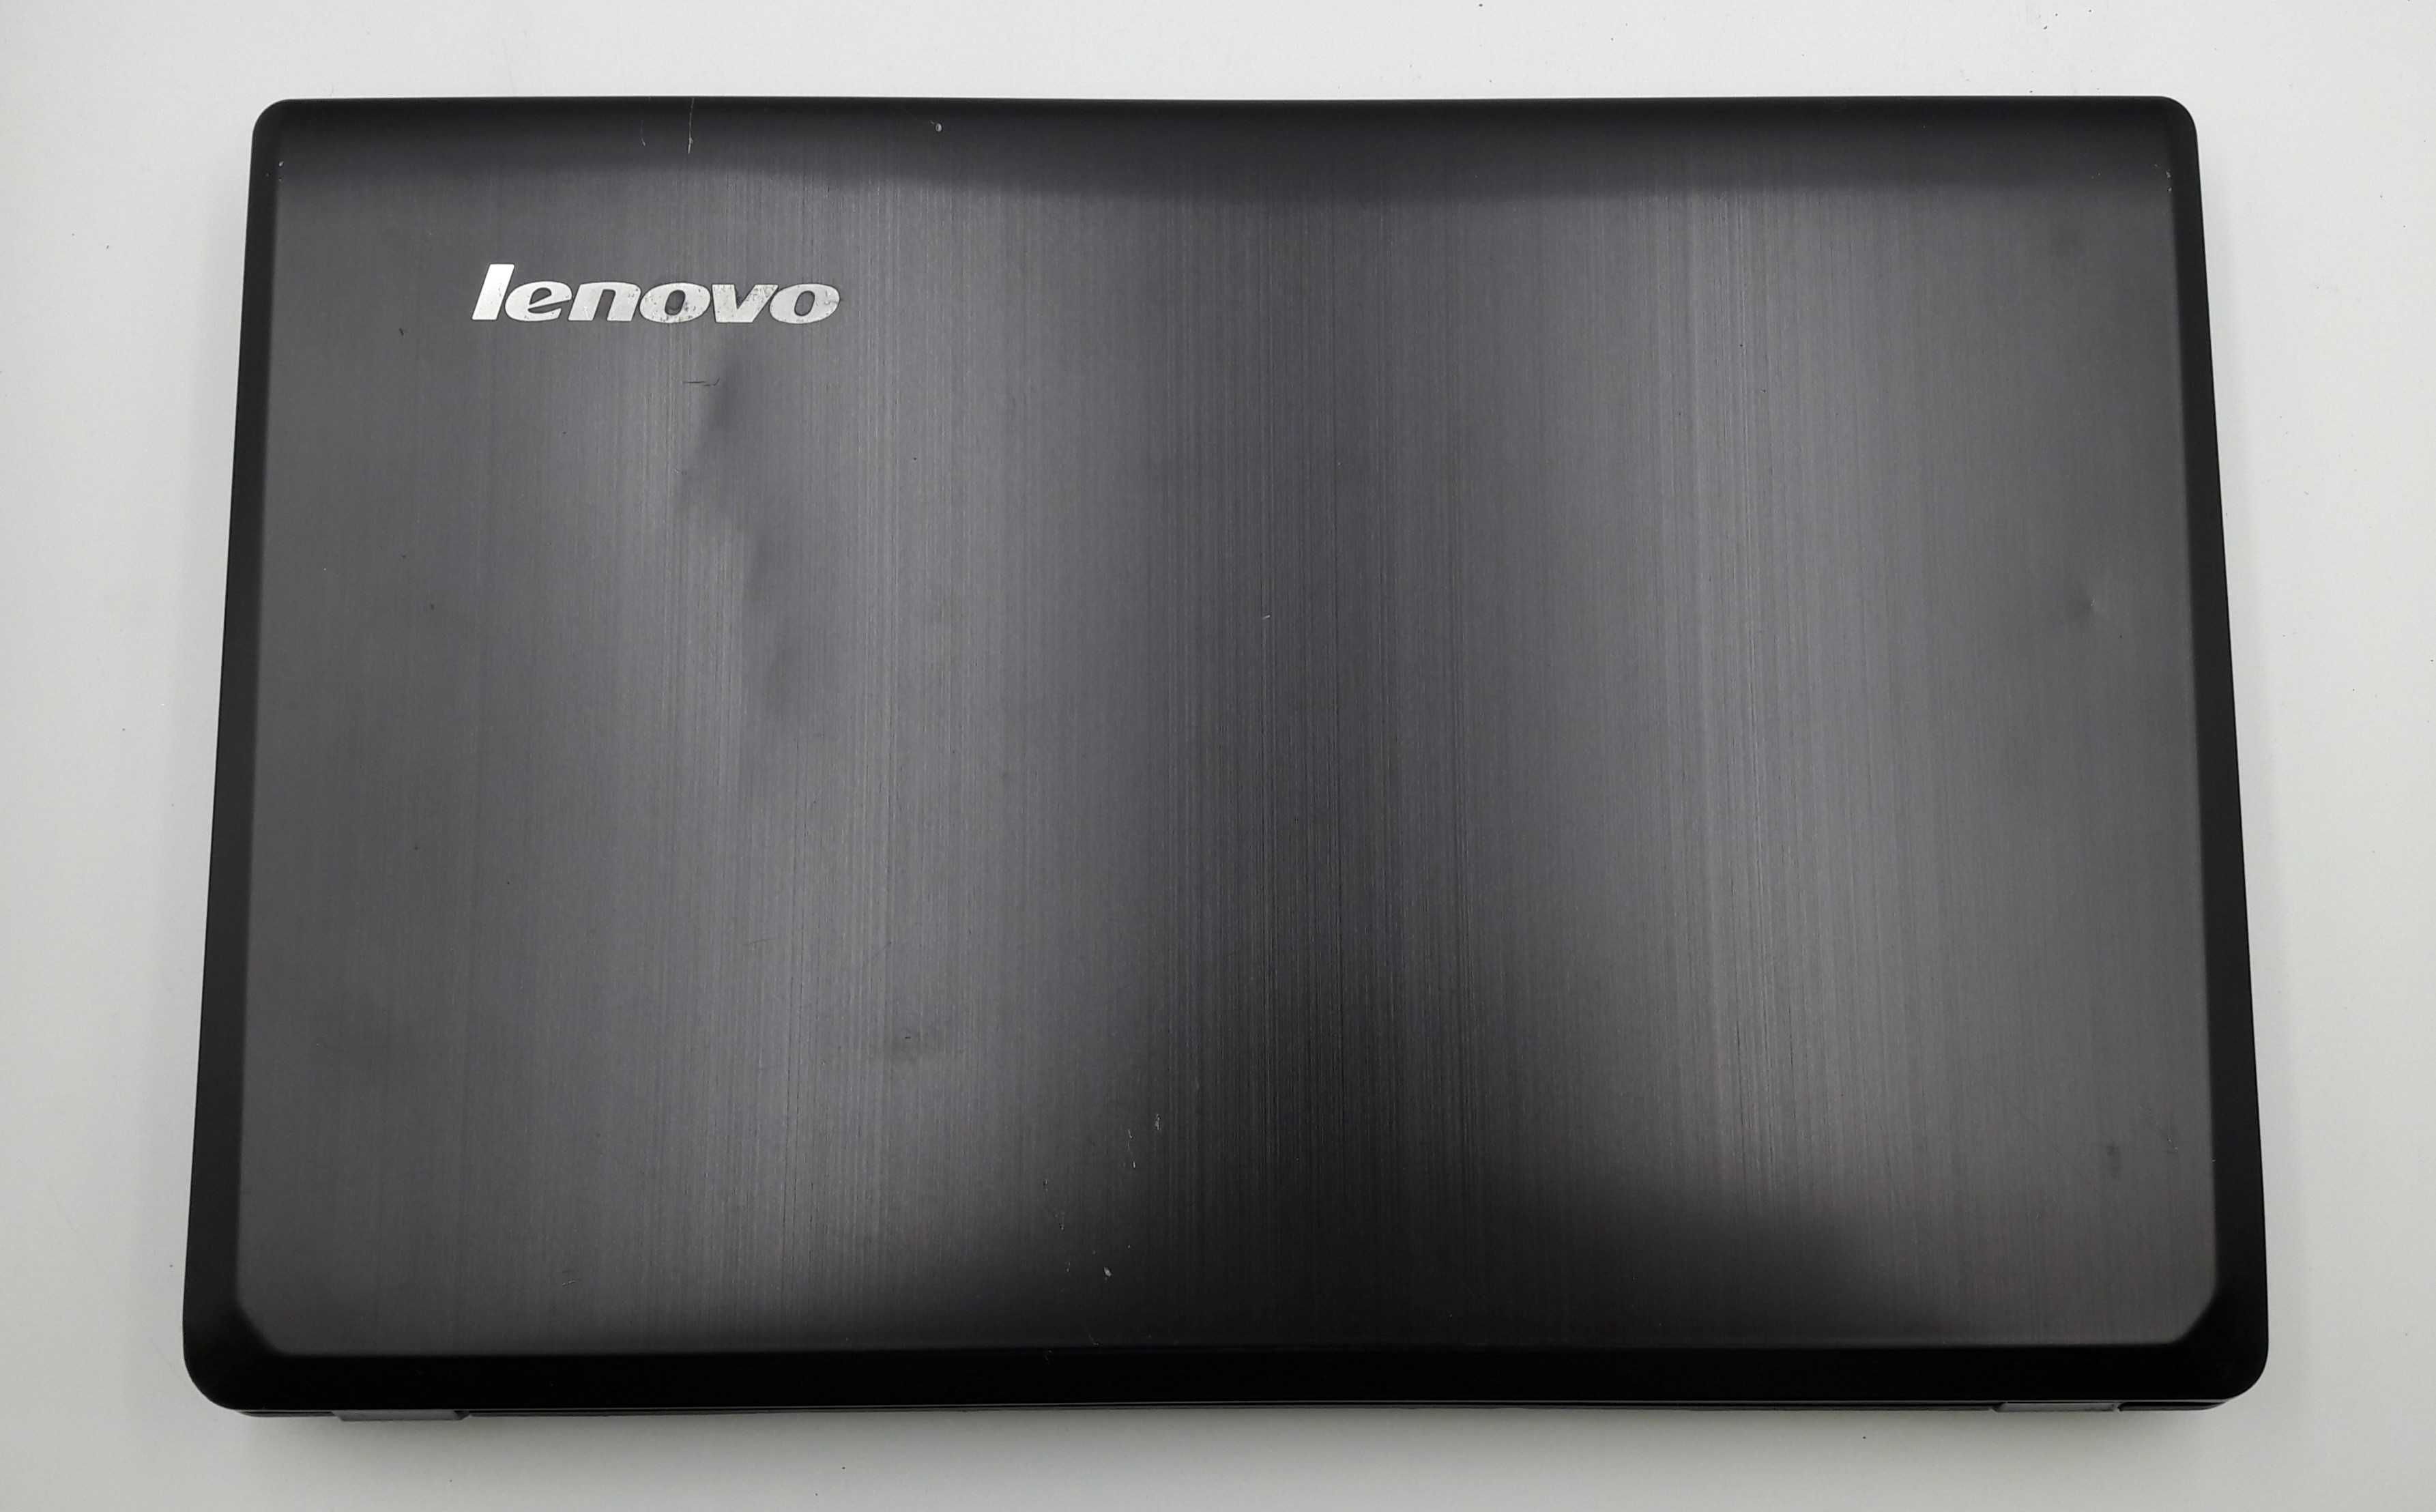 Laptop Lenovo IdeaPad Y580 16GB i7 HDD 1TB Win10 Brak baterii